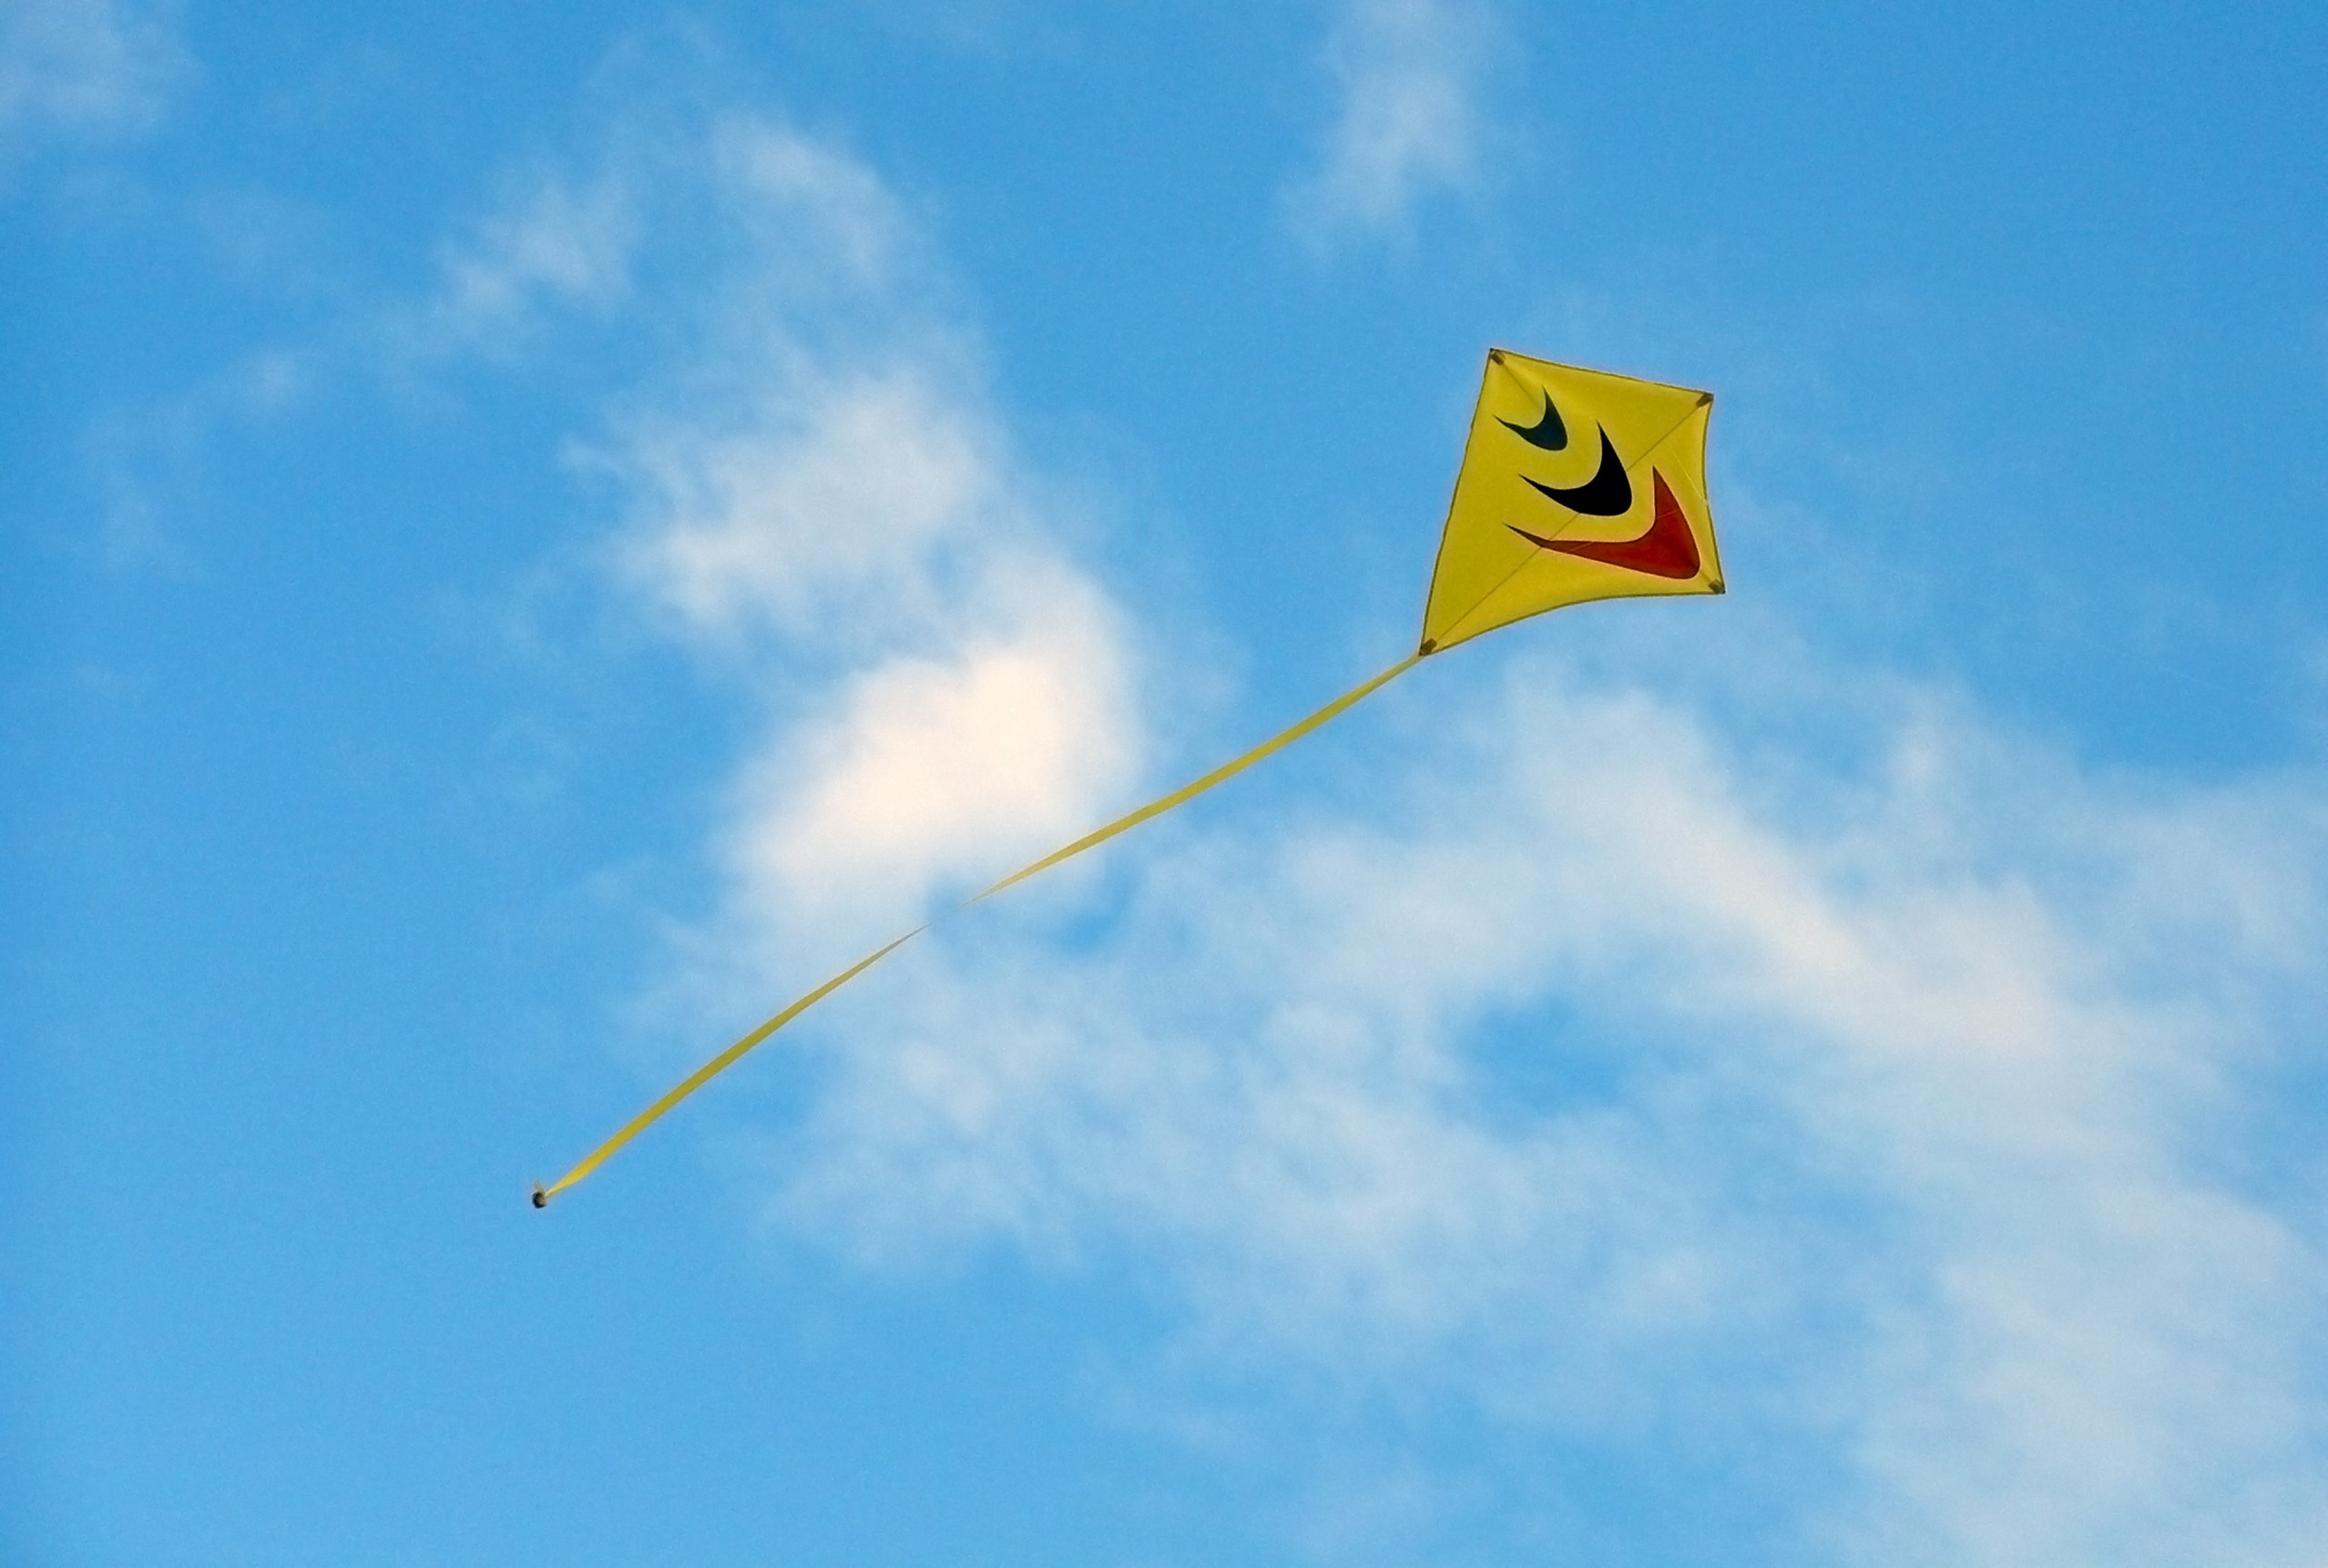 Kite Sports: Construction of the kite, Steering a kite, Ripstop nylon, Sail material. 2560x1730 HD Wallpaper.